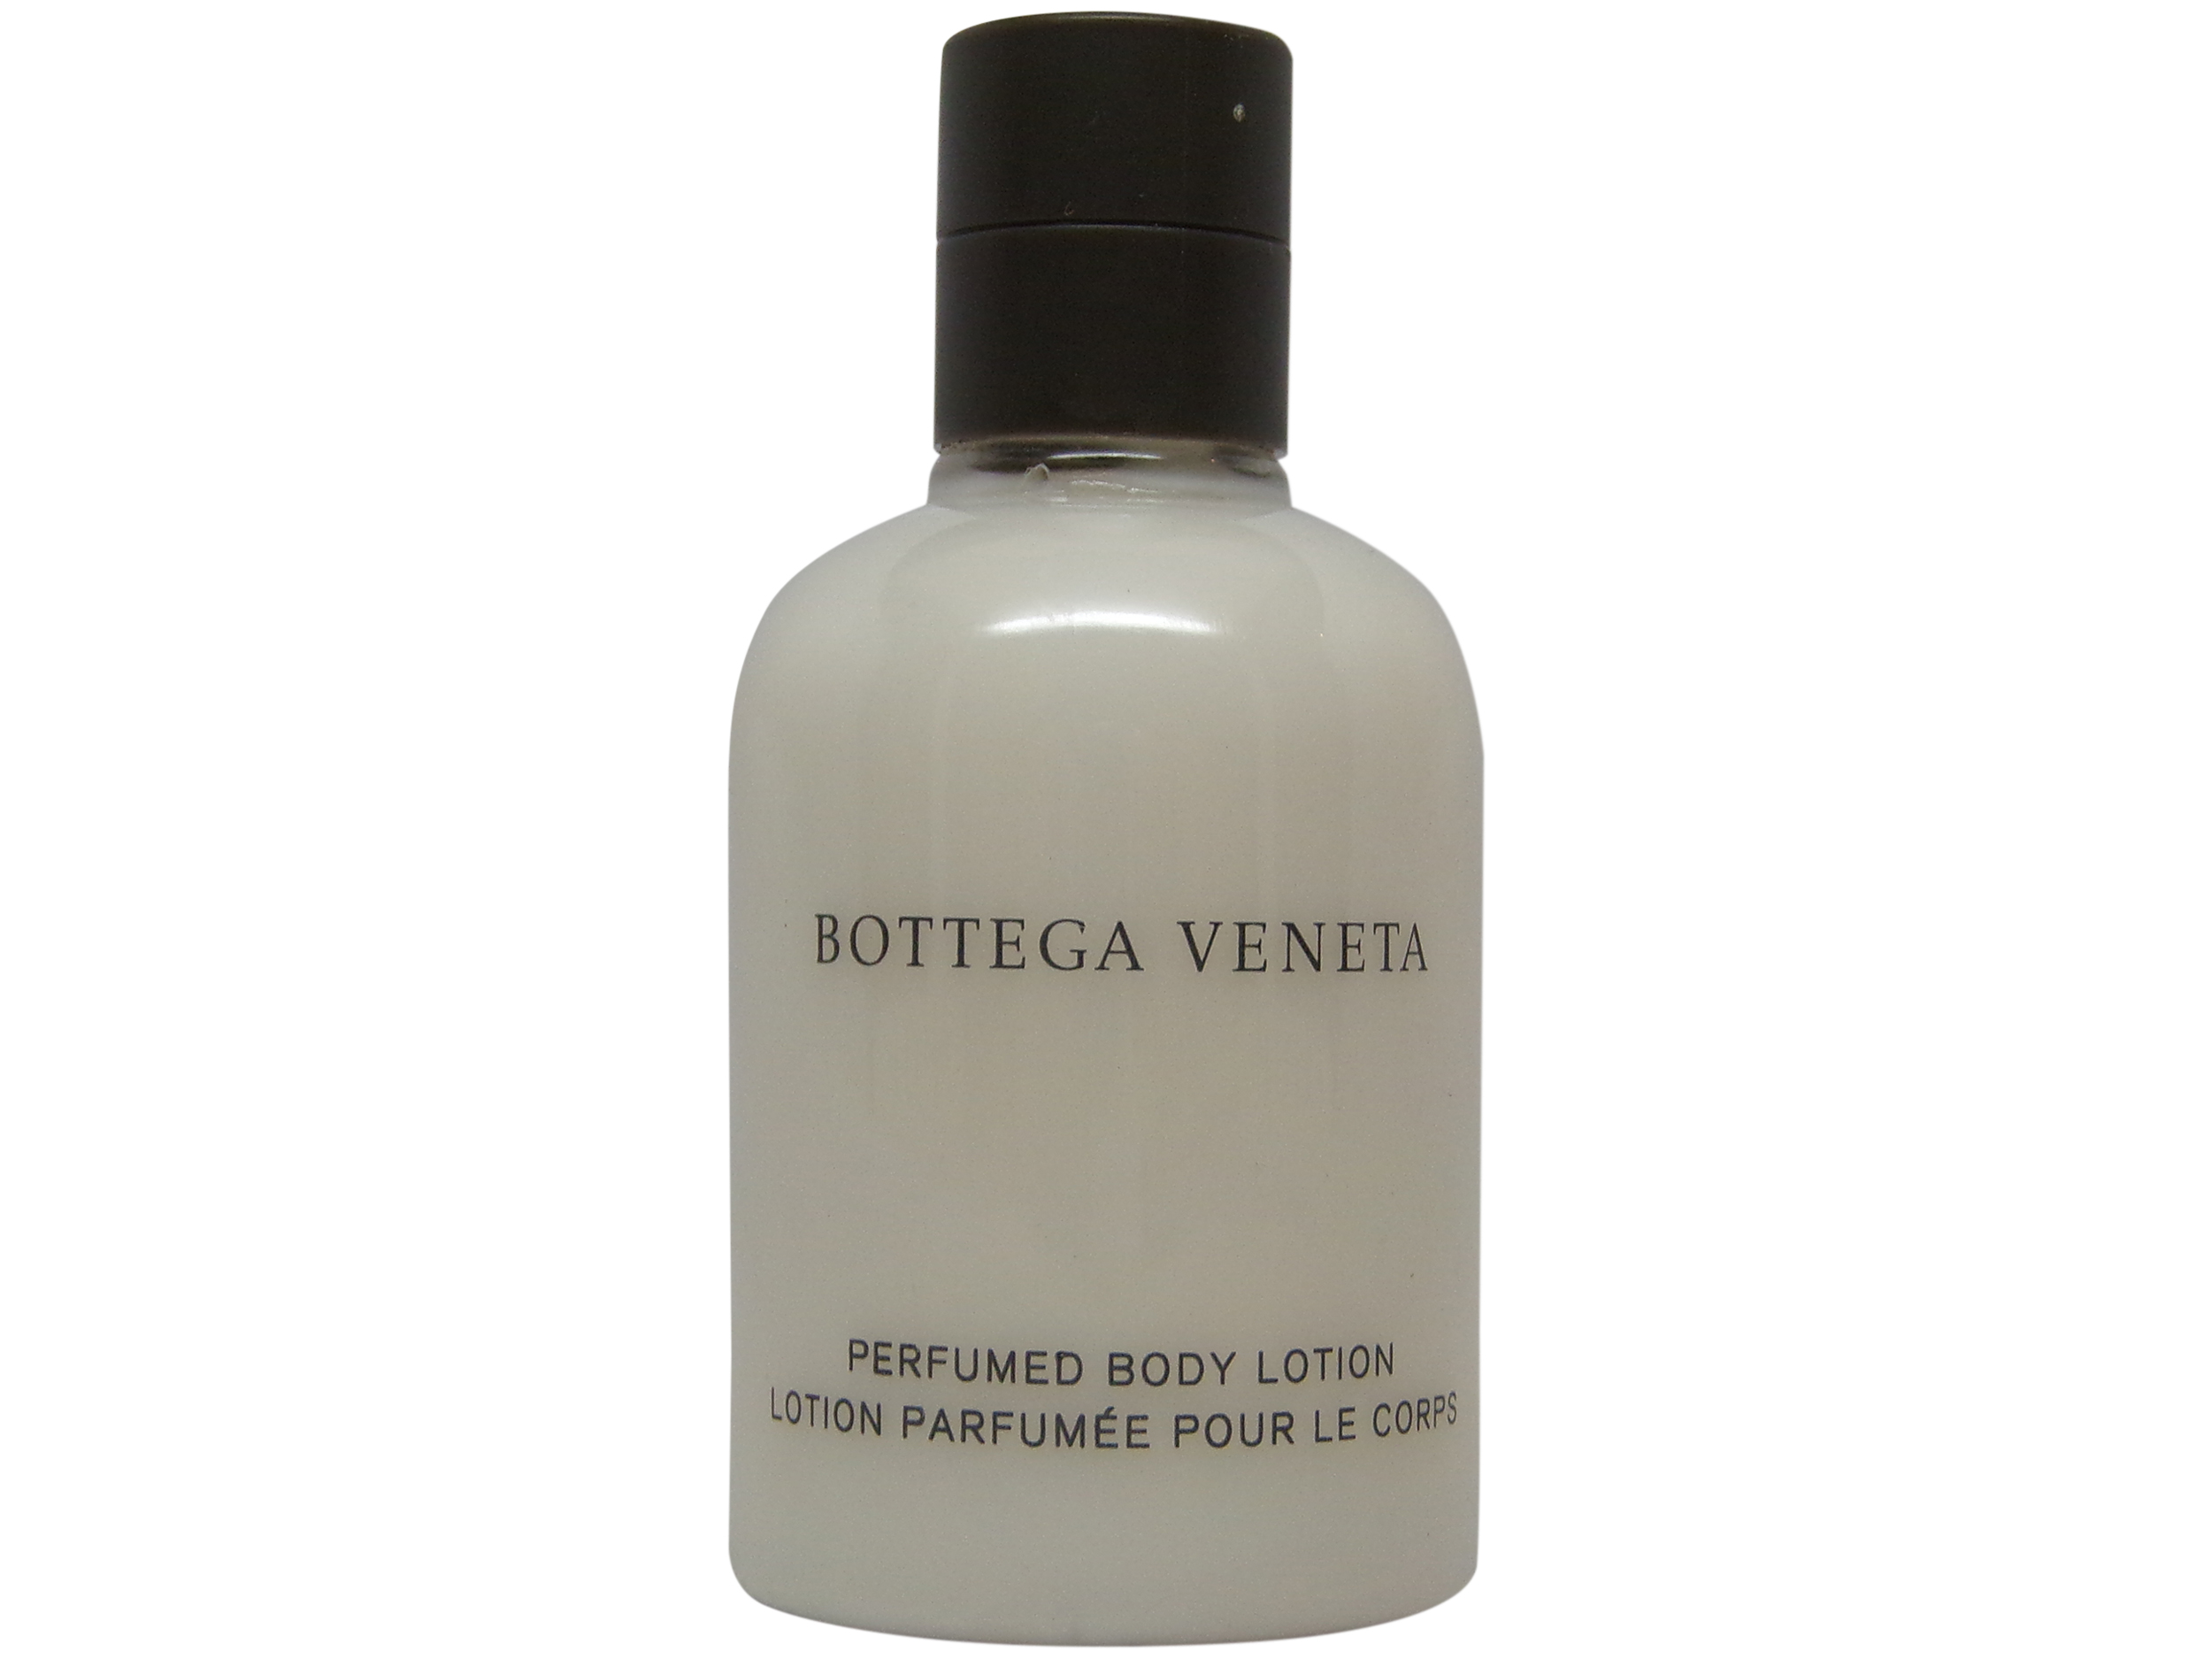 Bottega Veneta Perfumed Body Lotion lot of 2 each 3.4oz bottles. Total